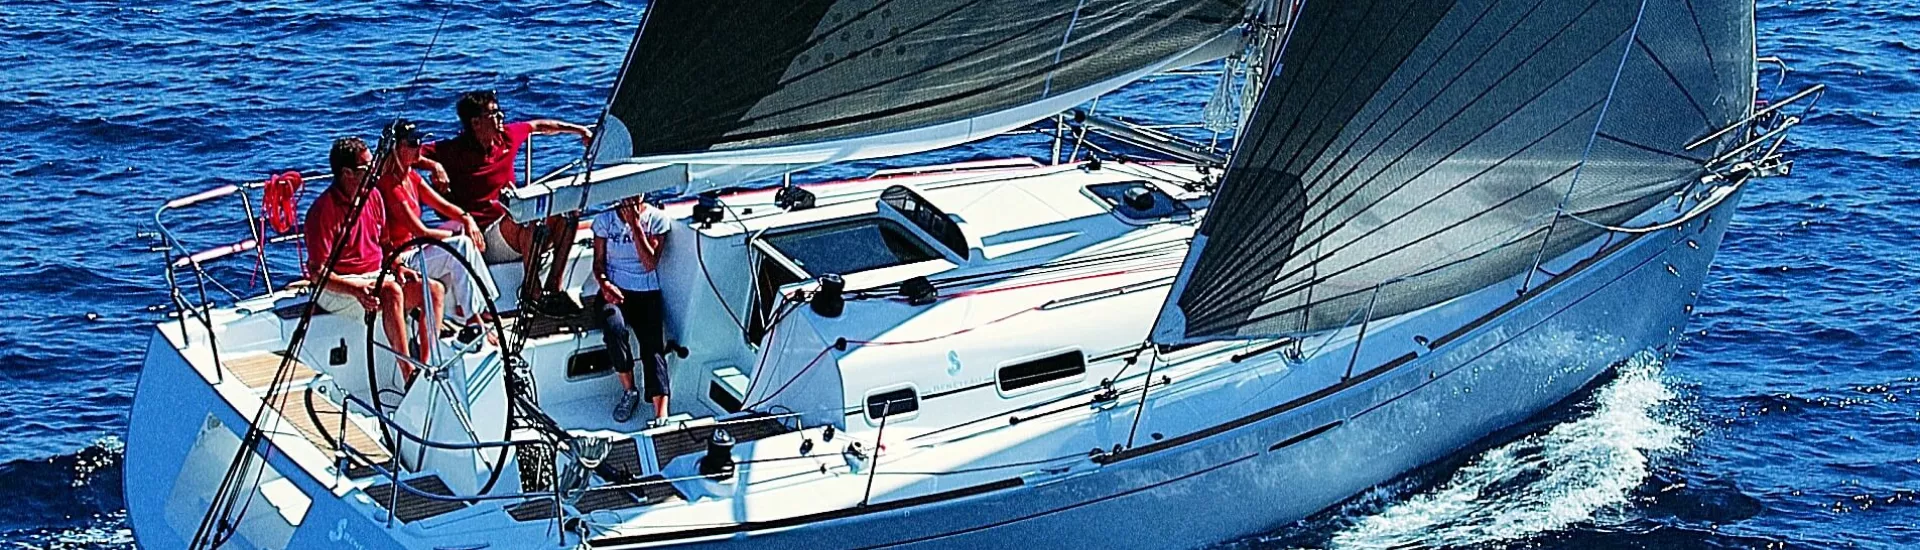 beneteau first 36 sailboat data